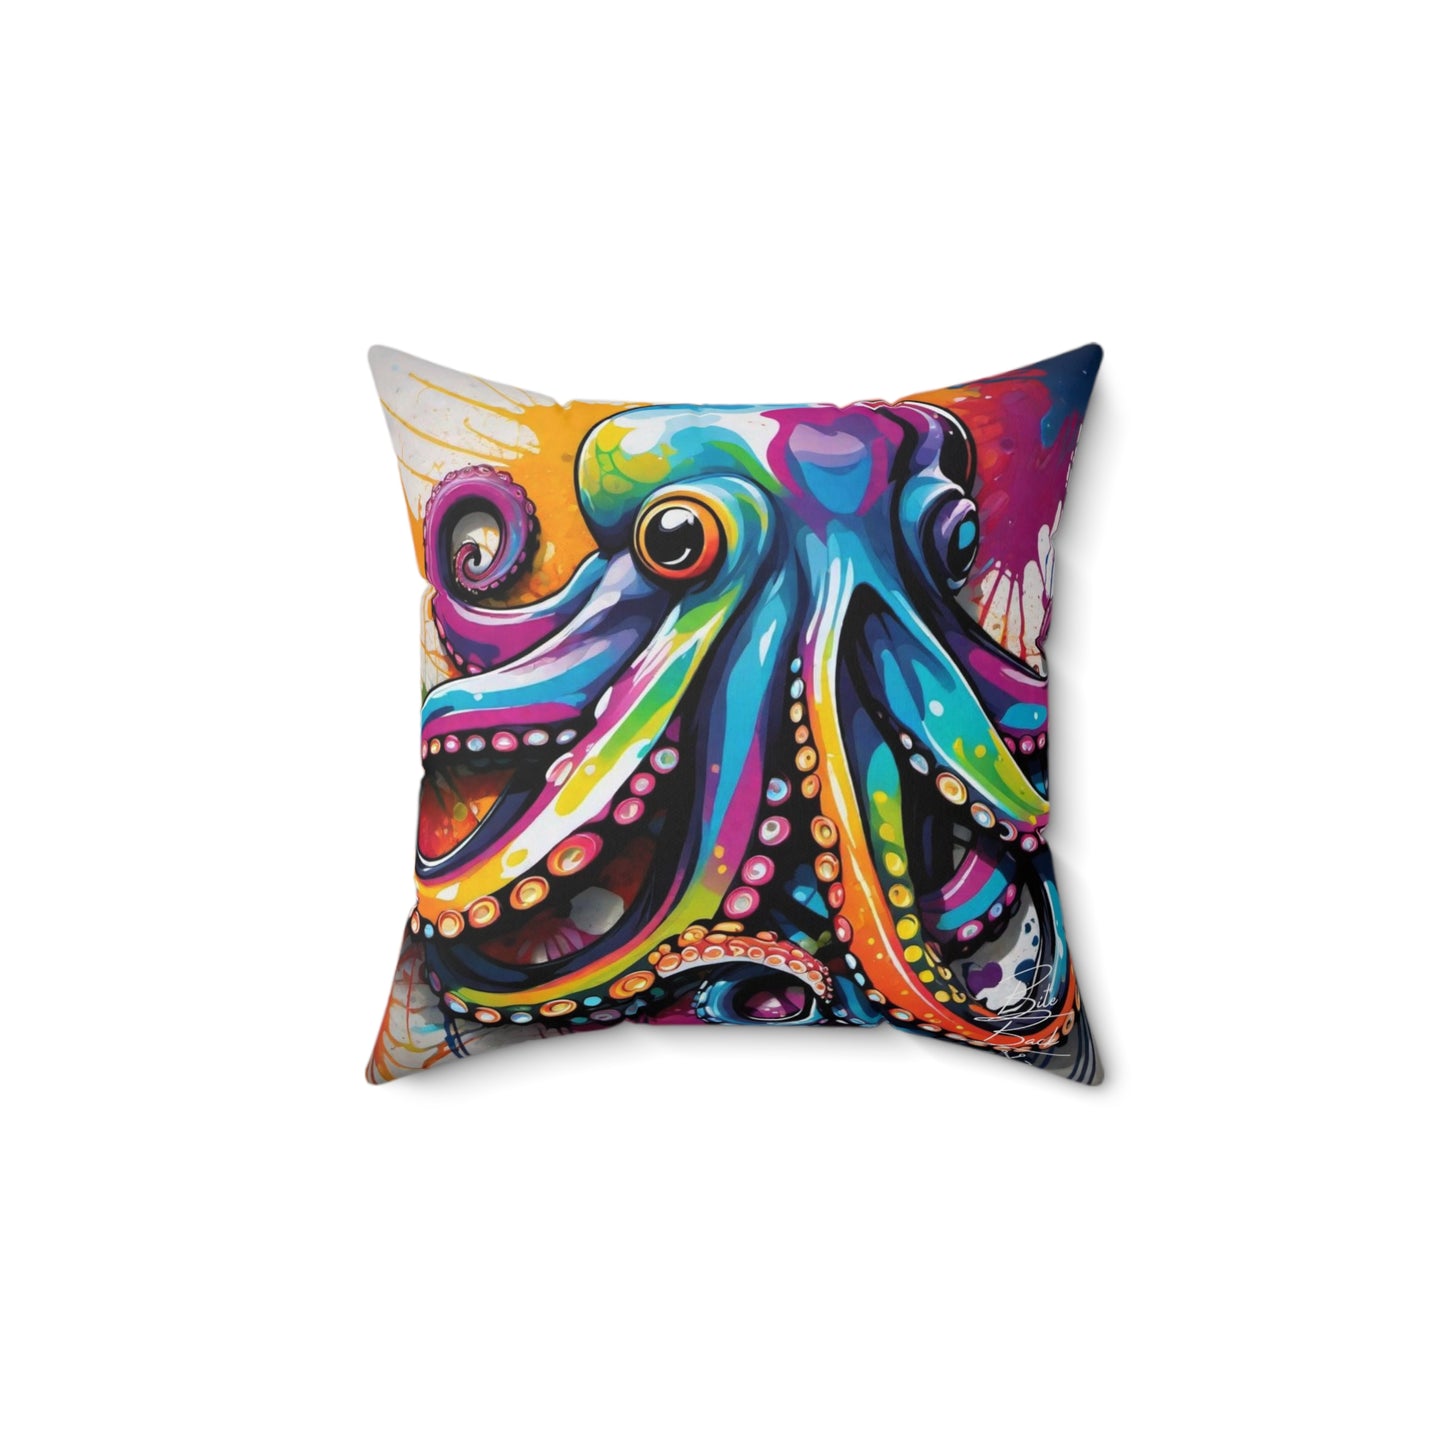 Octopus Graffiti Square Pillow